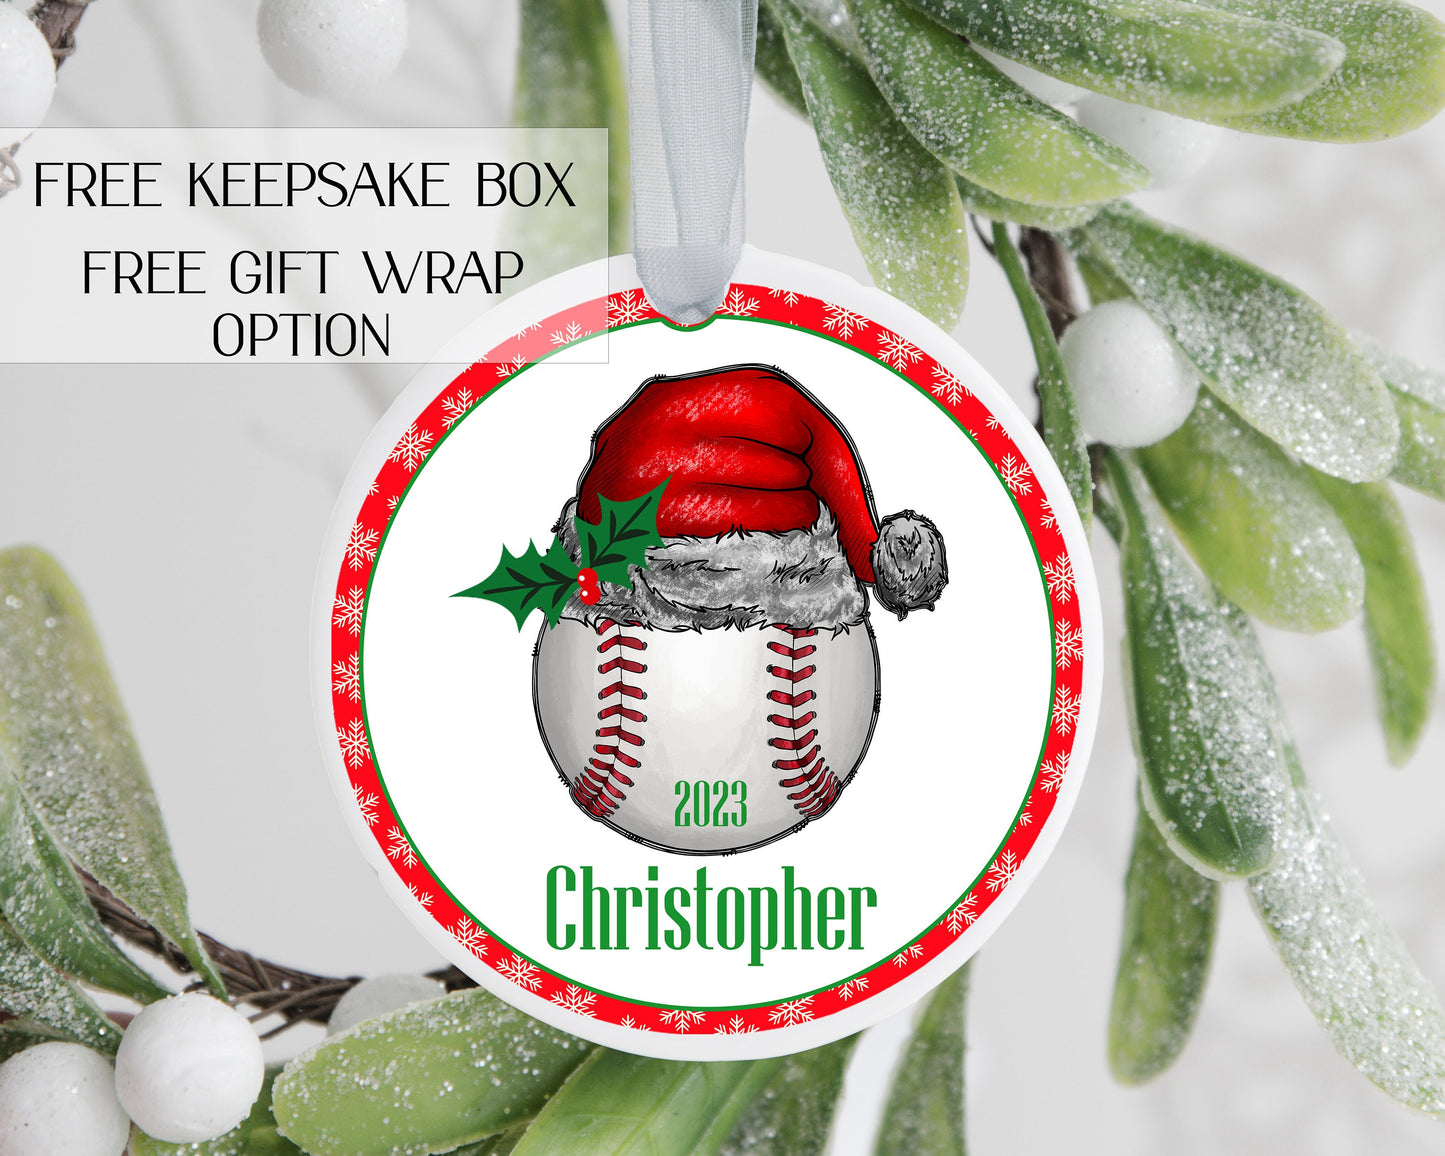 Baseball ornament - Baseball Christmas ornament - Ceramic baseball ornament - sports ornaments - baseball coach Christmas